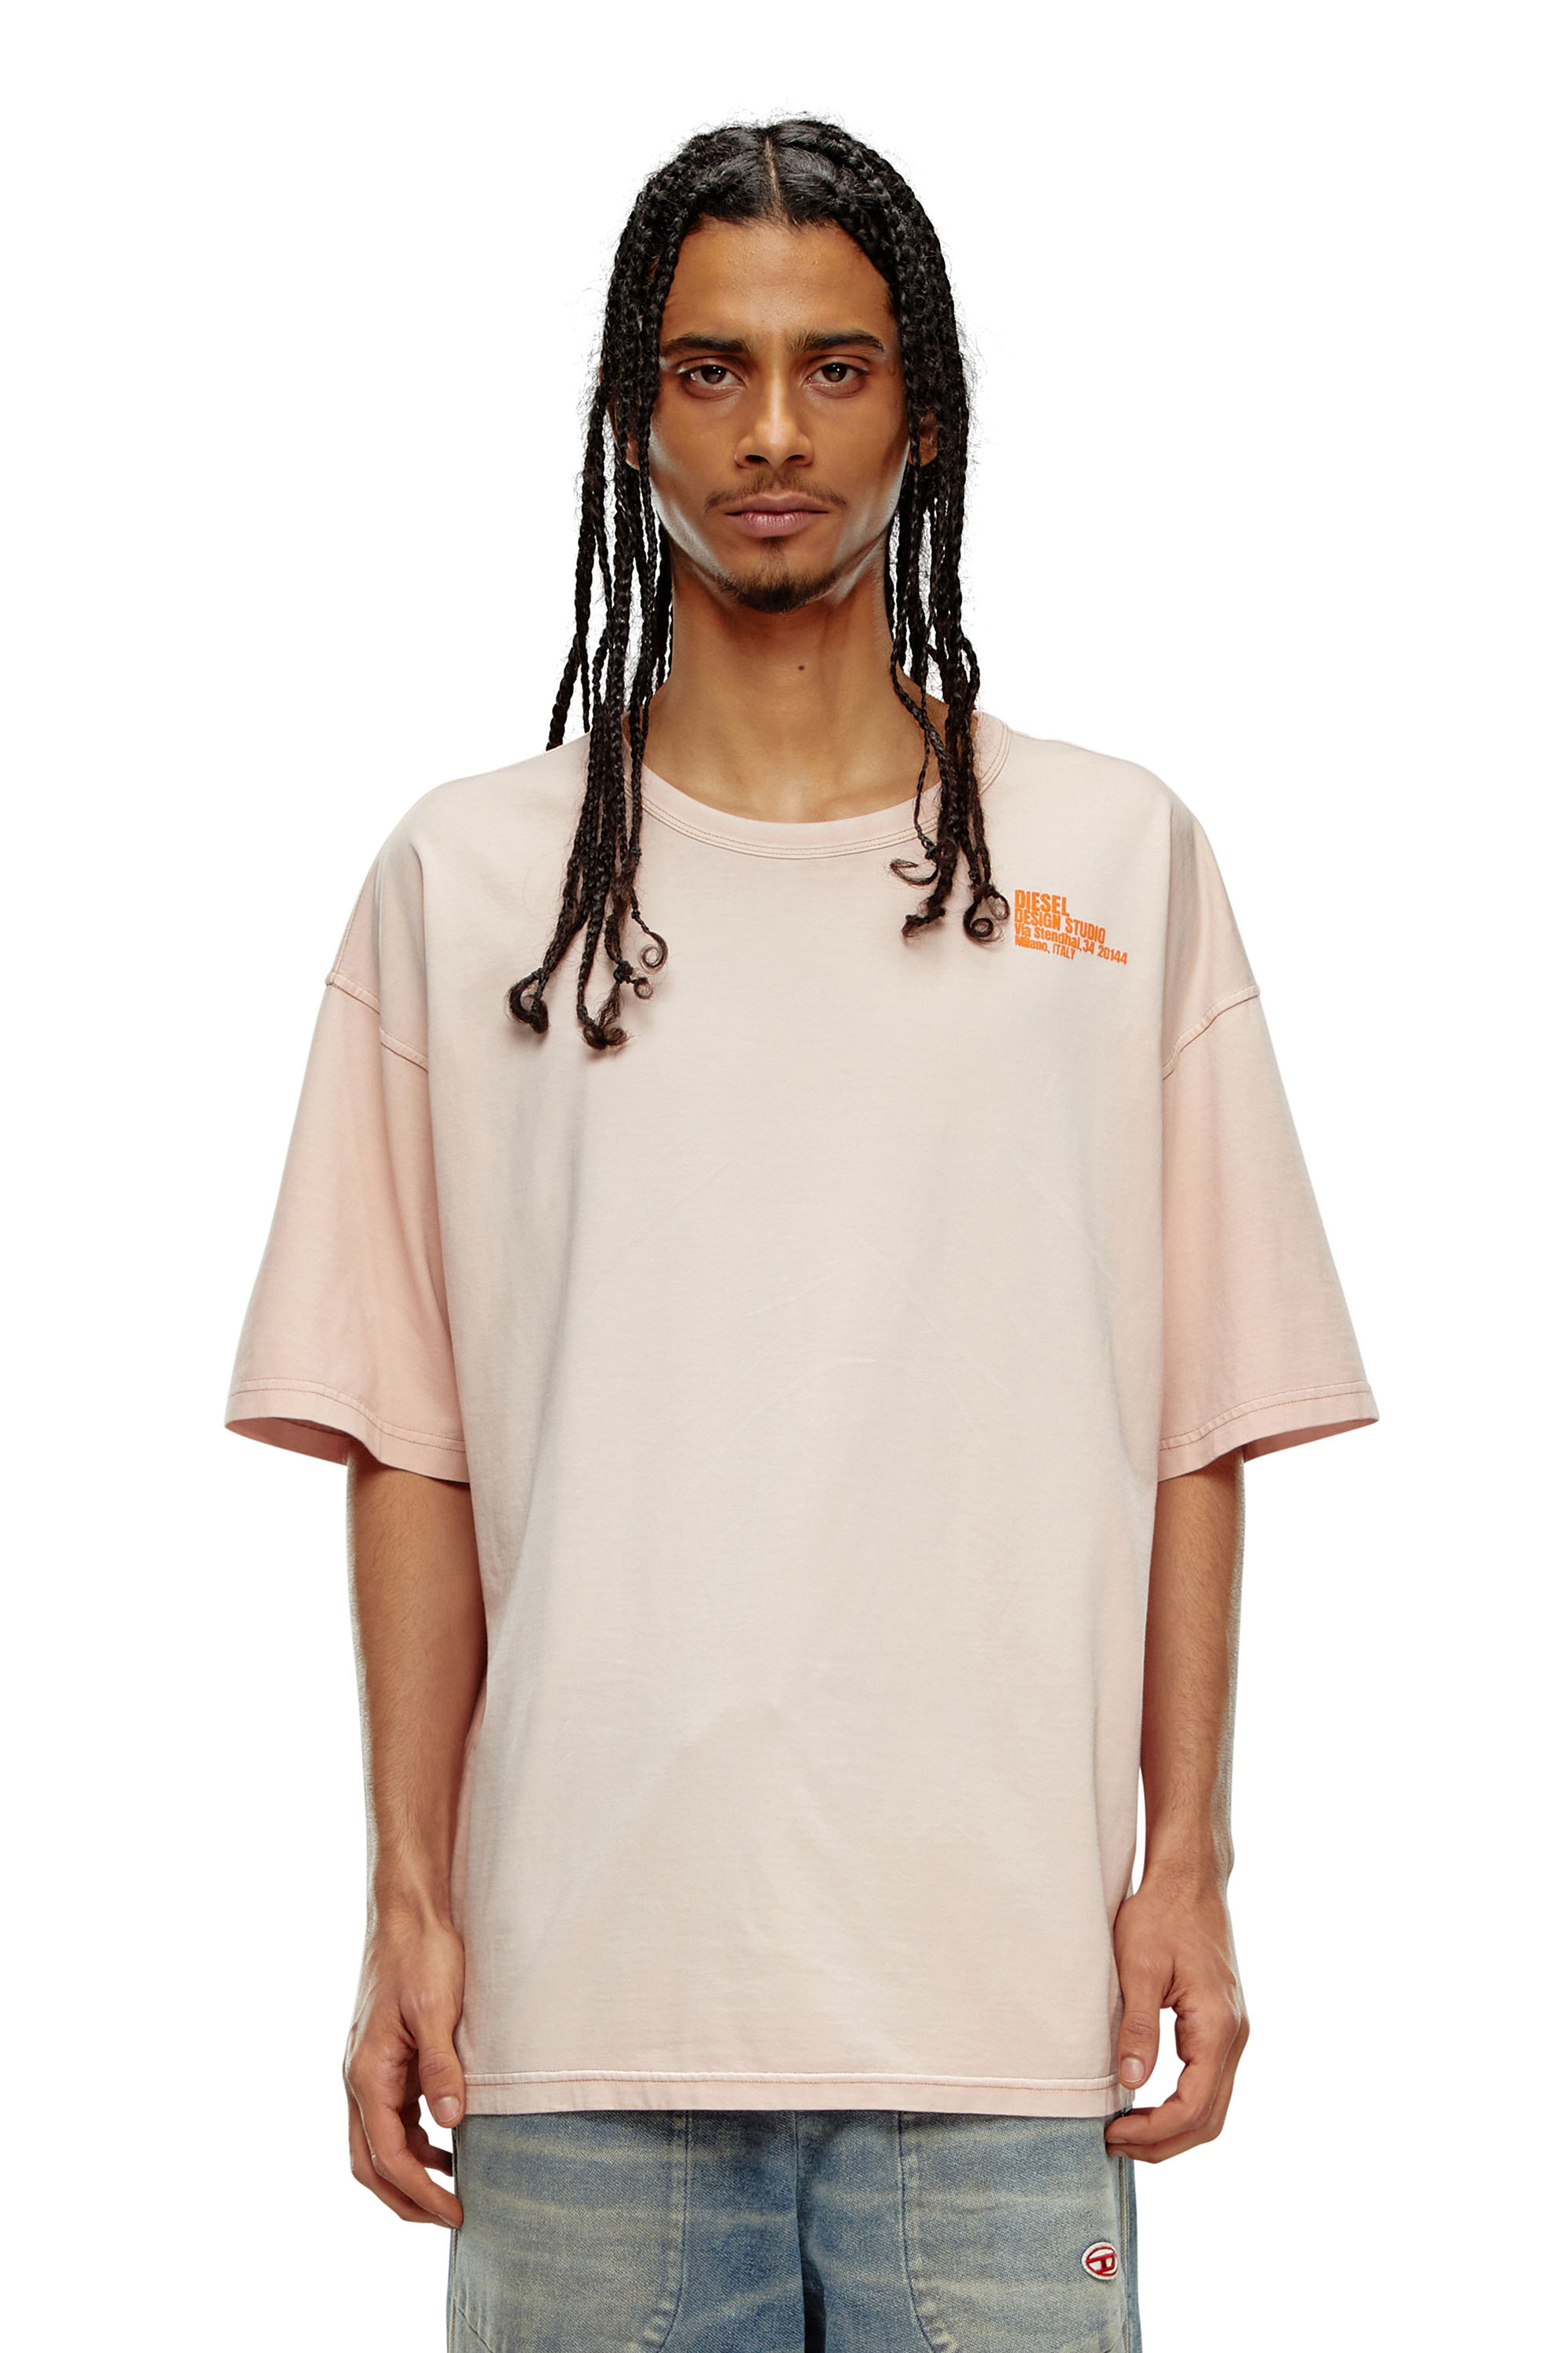 Diesel - T-BOXT-N7, Homme T-shirt avec mini imprimé Design Studio in Rose - Image 3